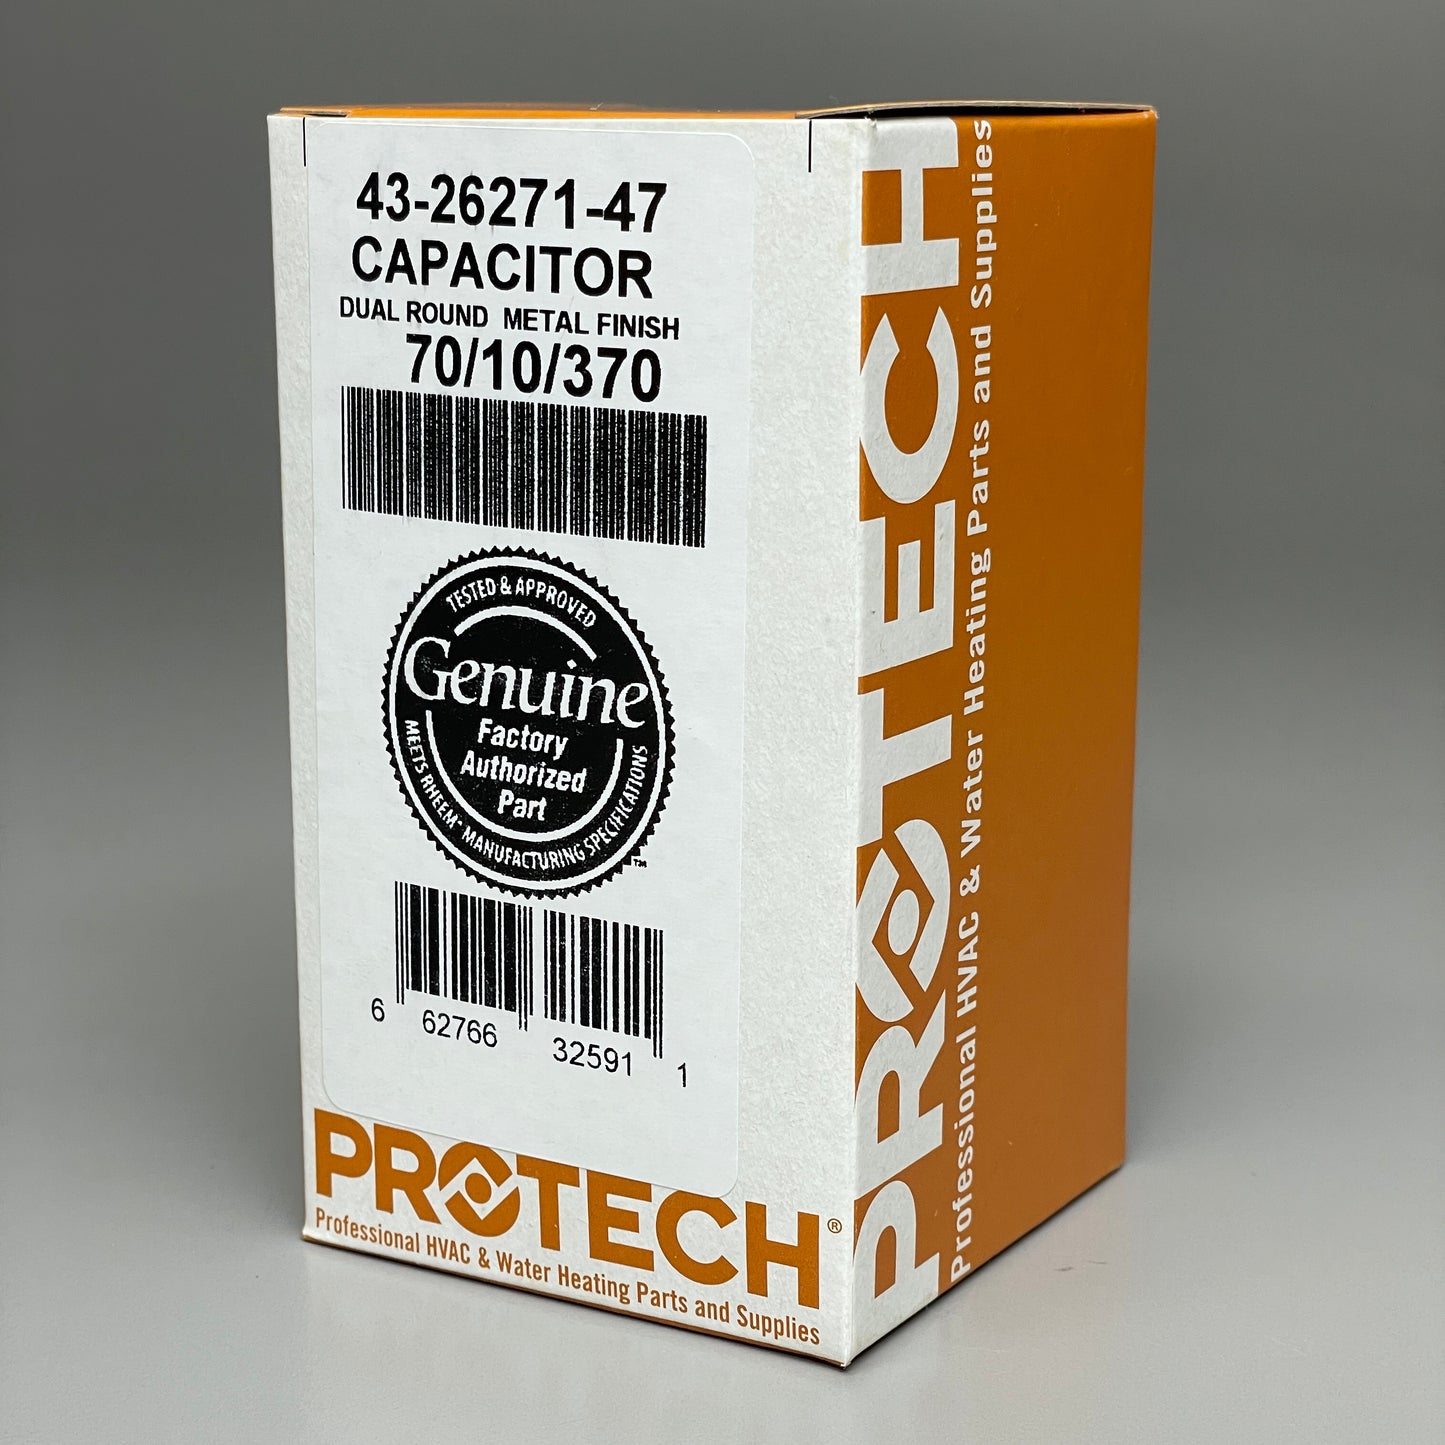 PROTECH Rheem Ruud Capacitor Dual Round Metal Finish 70/10/370 7+10uf 43-26271-47 (New)